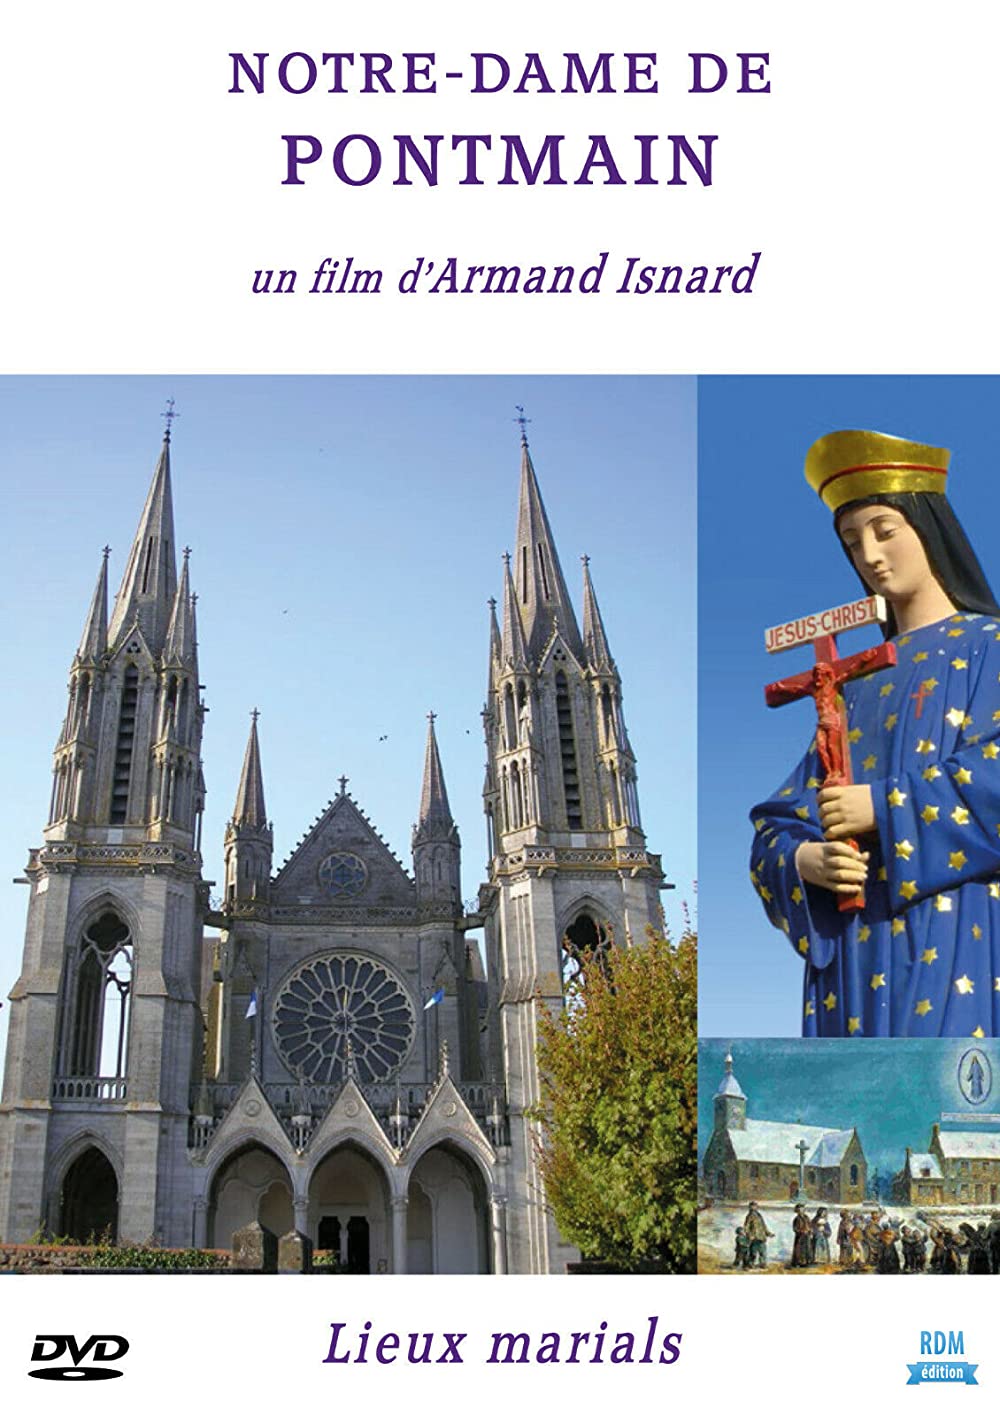 Filmbeschreibung zu Notre-Dame du Nil (OV)